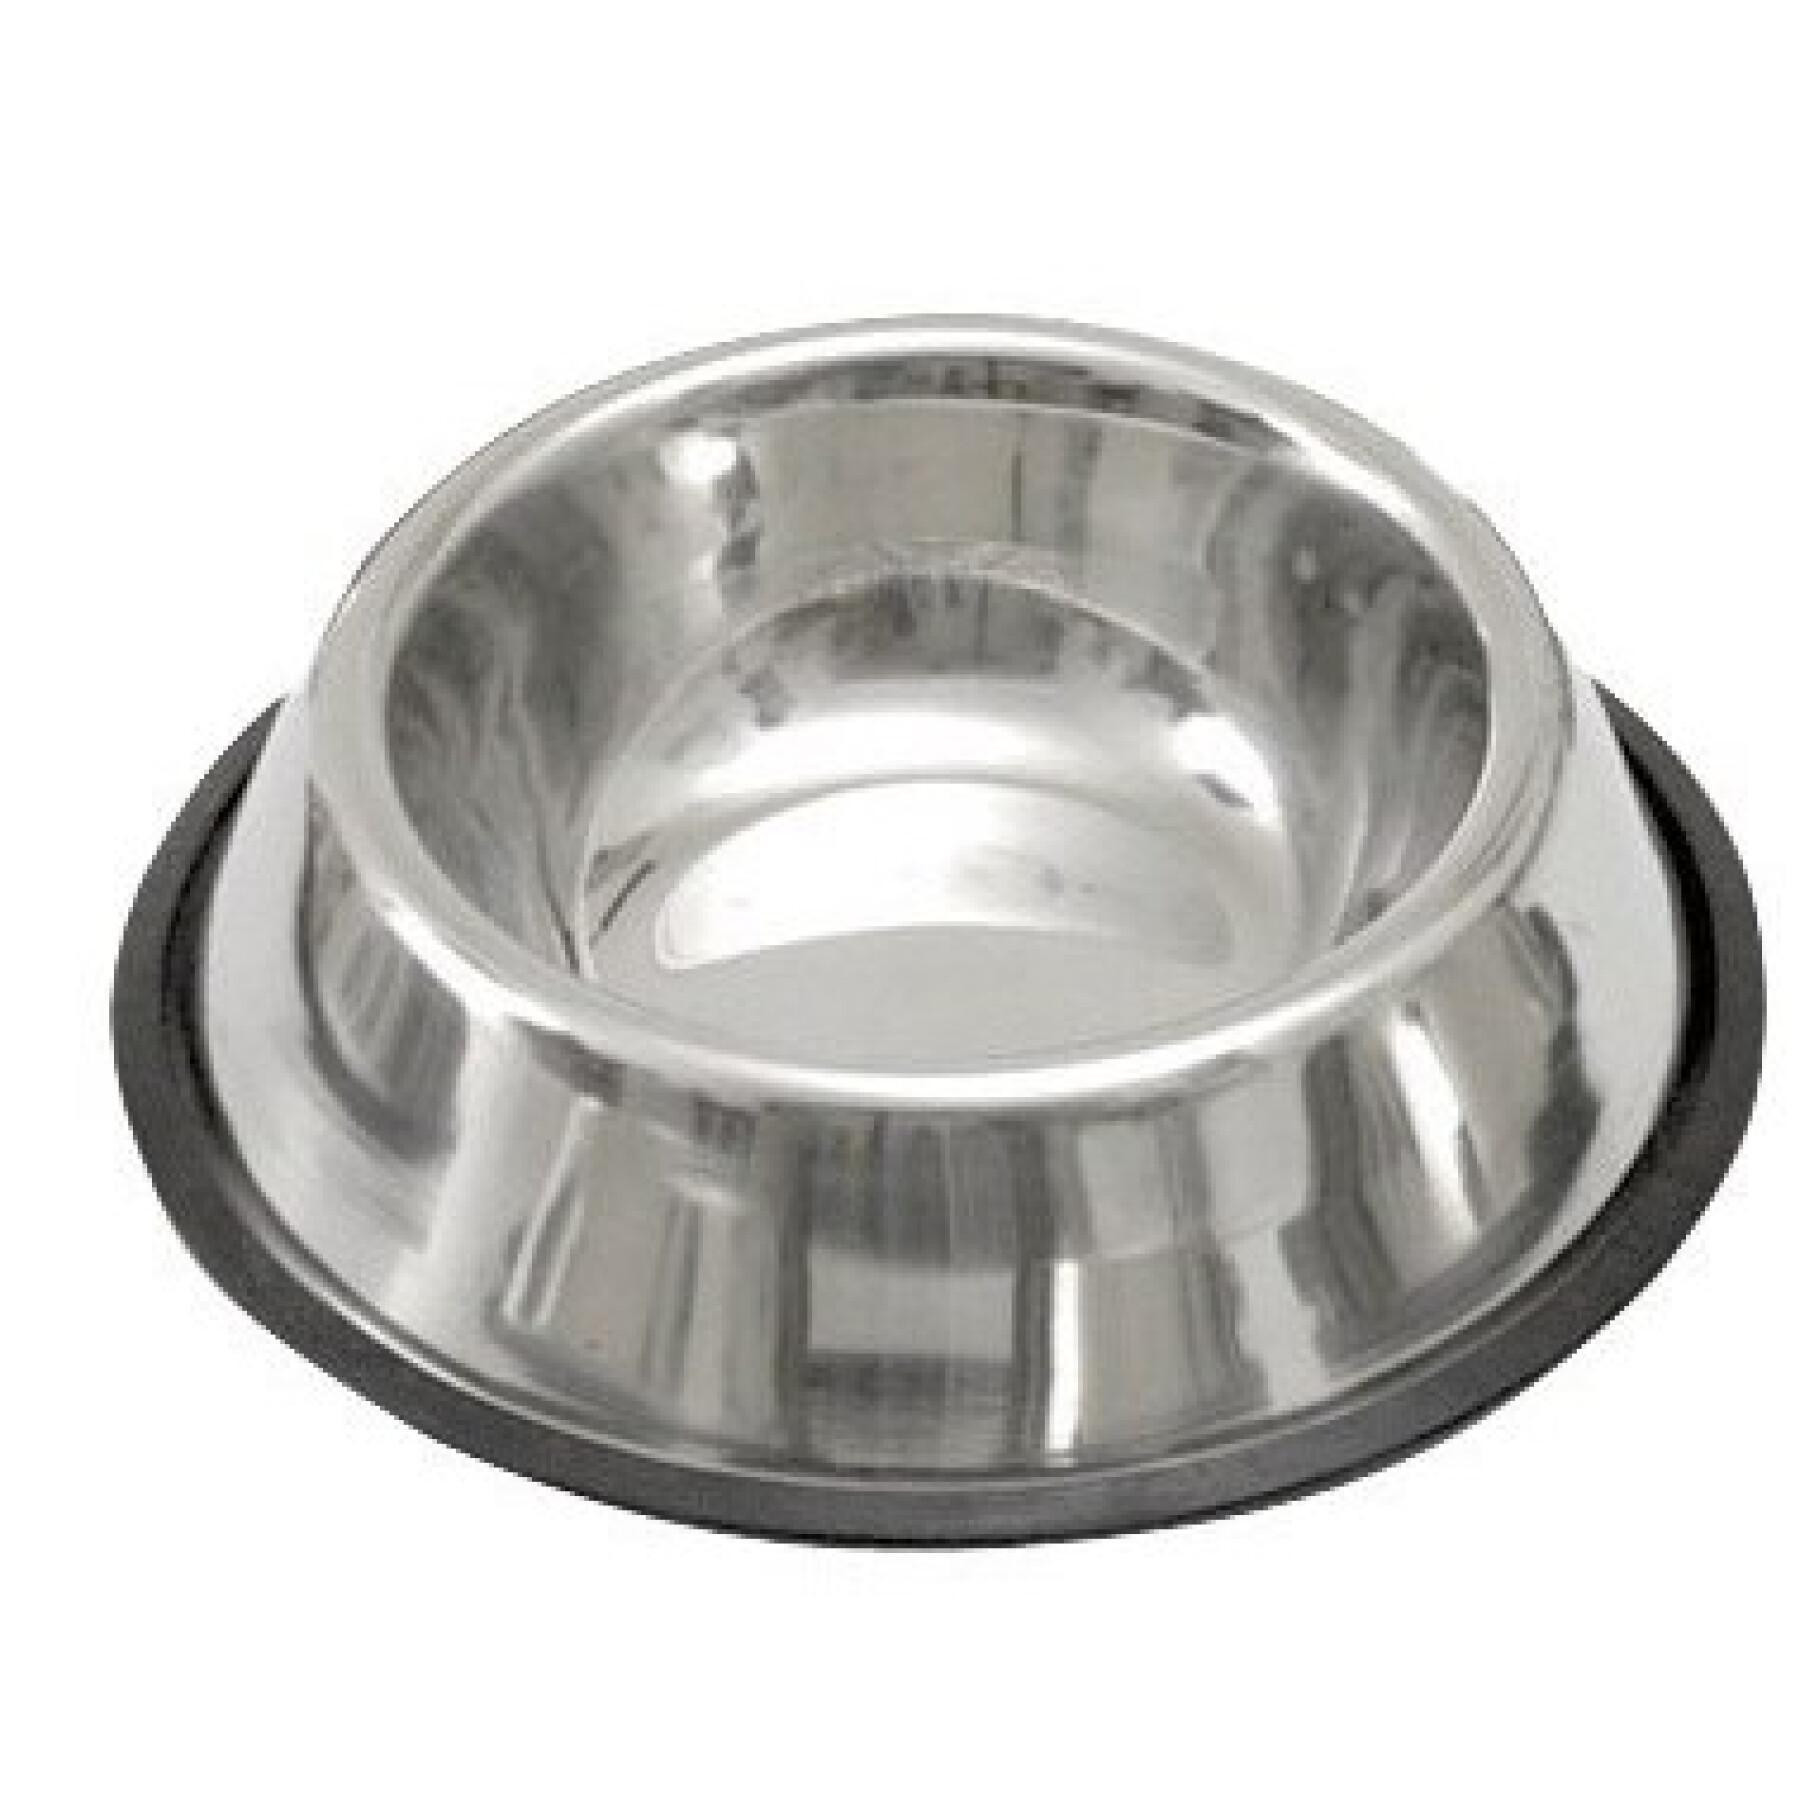 Anti-slip stainless steel bowl Kerbl